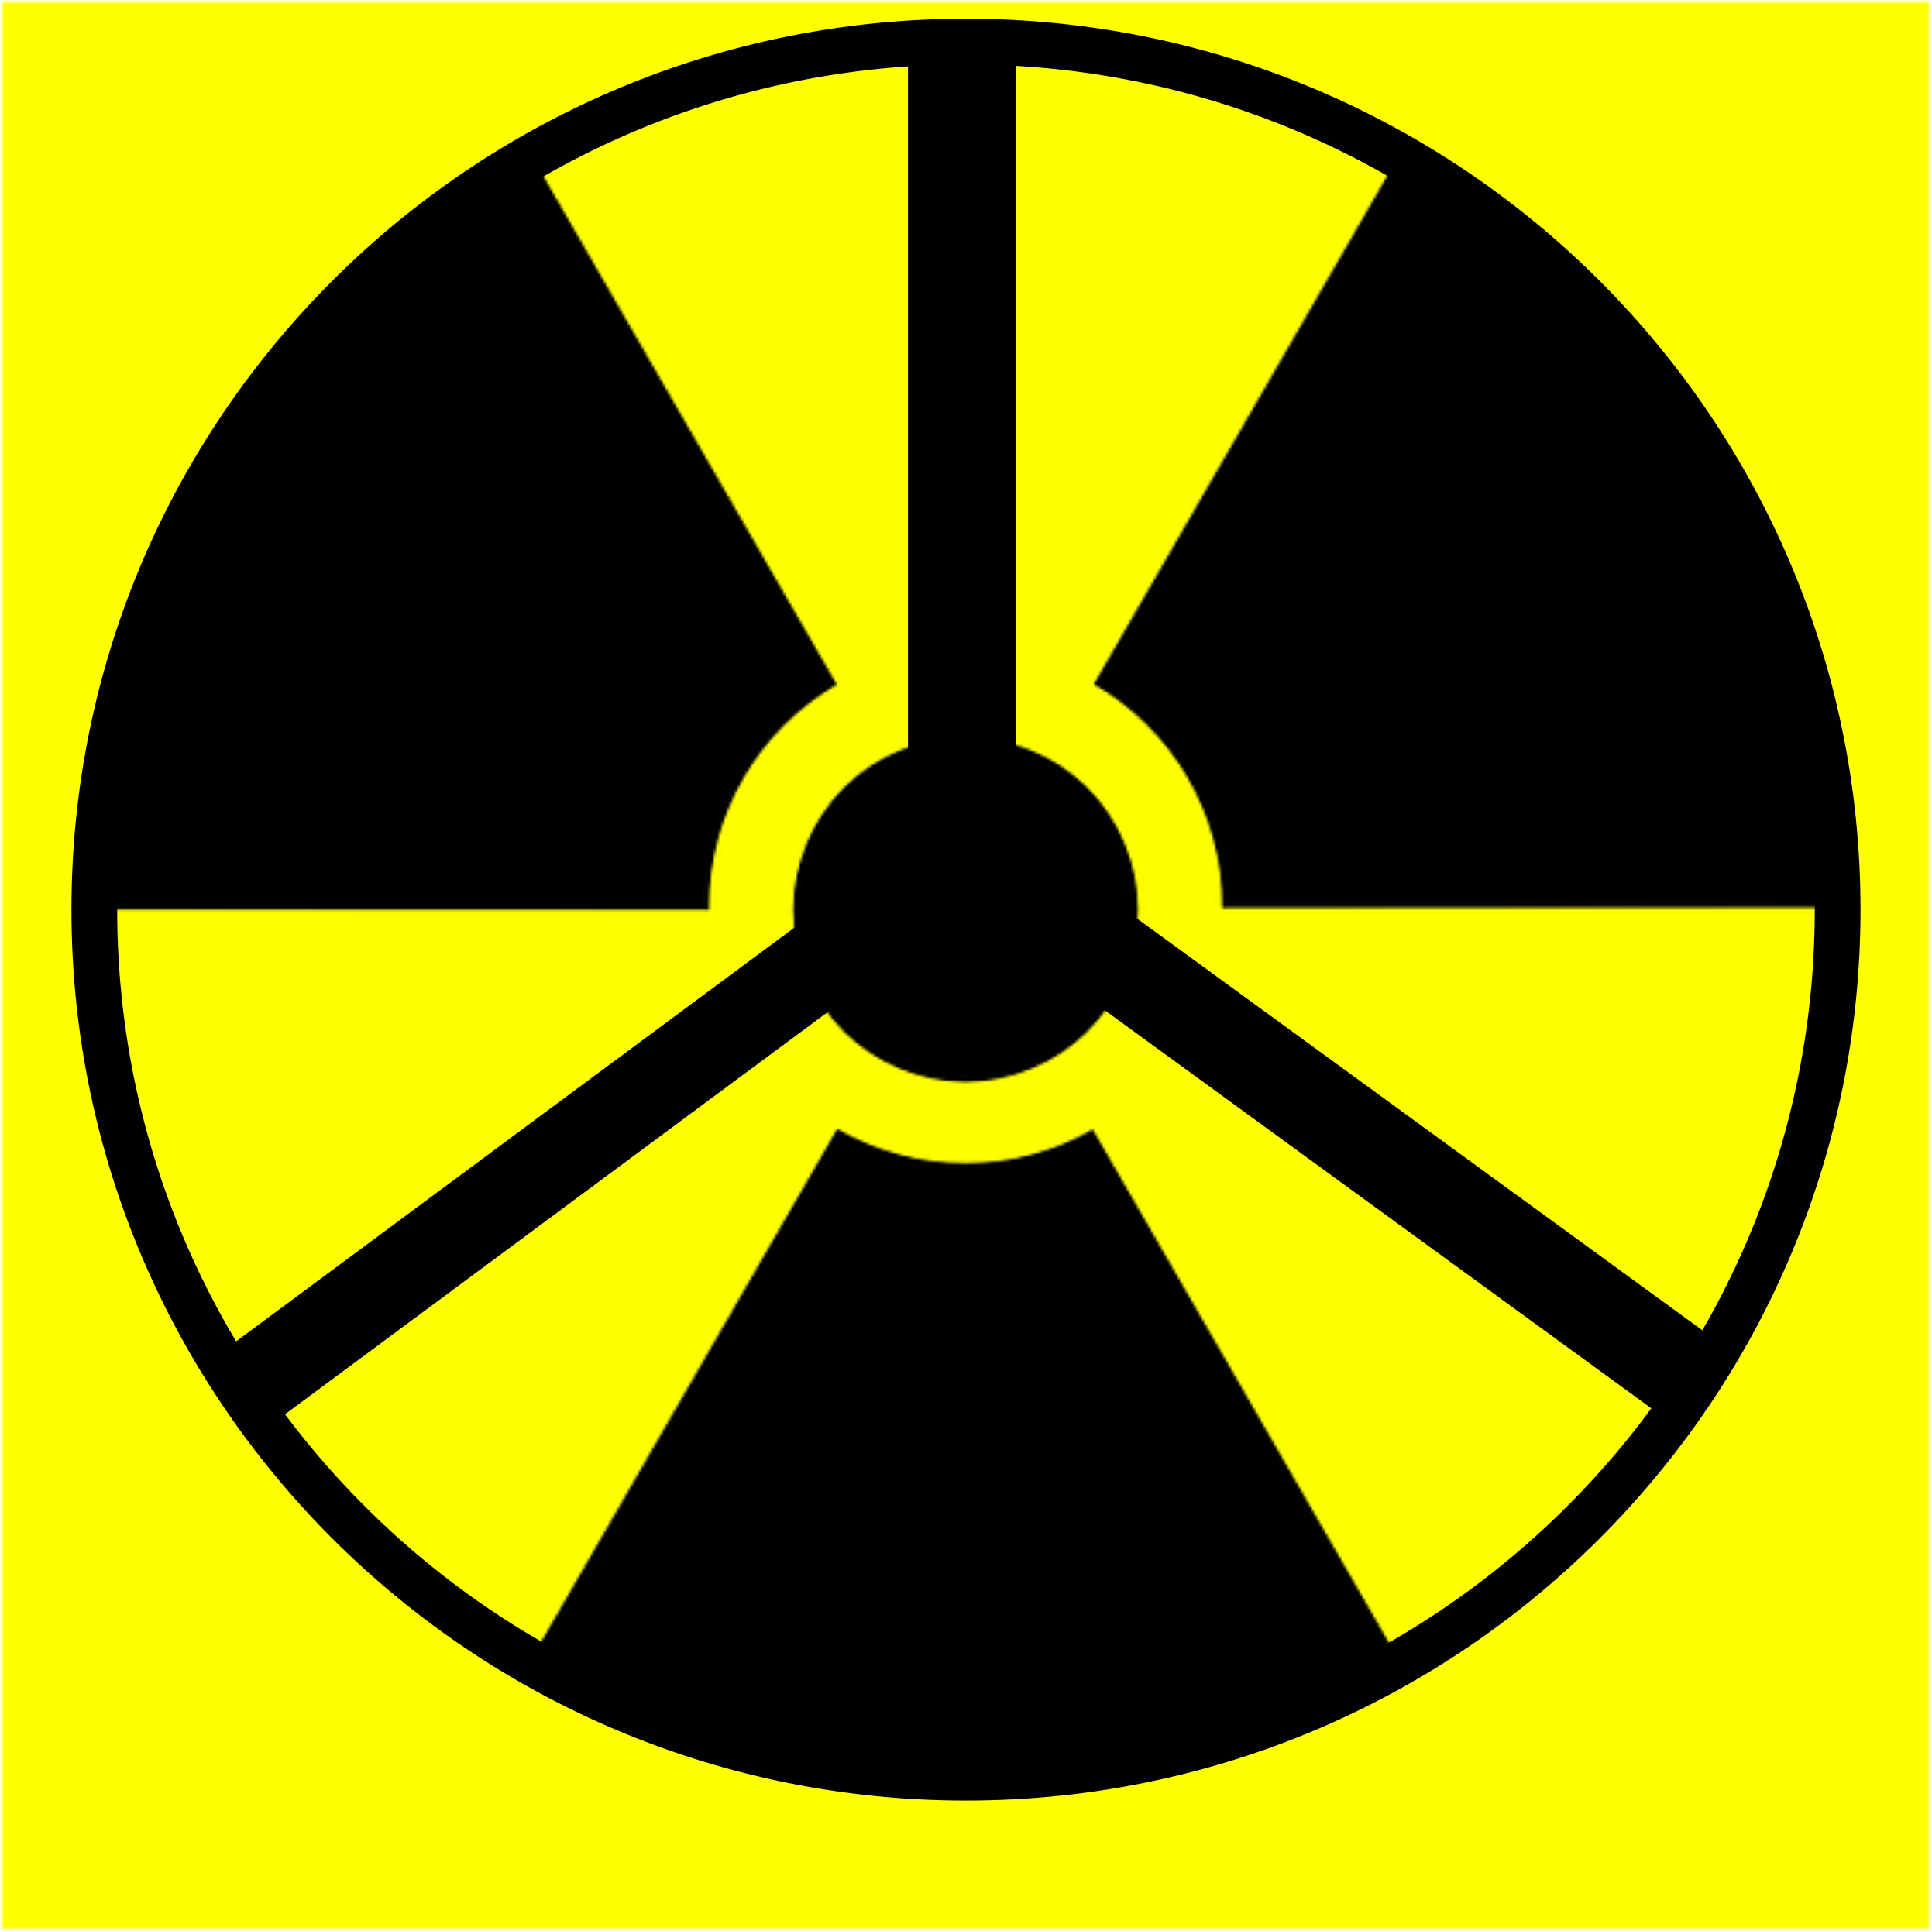 ATOMWAFFENsperrVERTRAG: Atomenergie sind Atomwaffen sind Harrisburg – Tschernobyl – Hiroshima – Nagasaki – Fukushima – Gorleben.